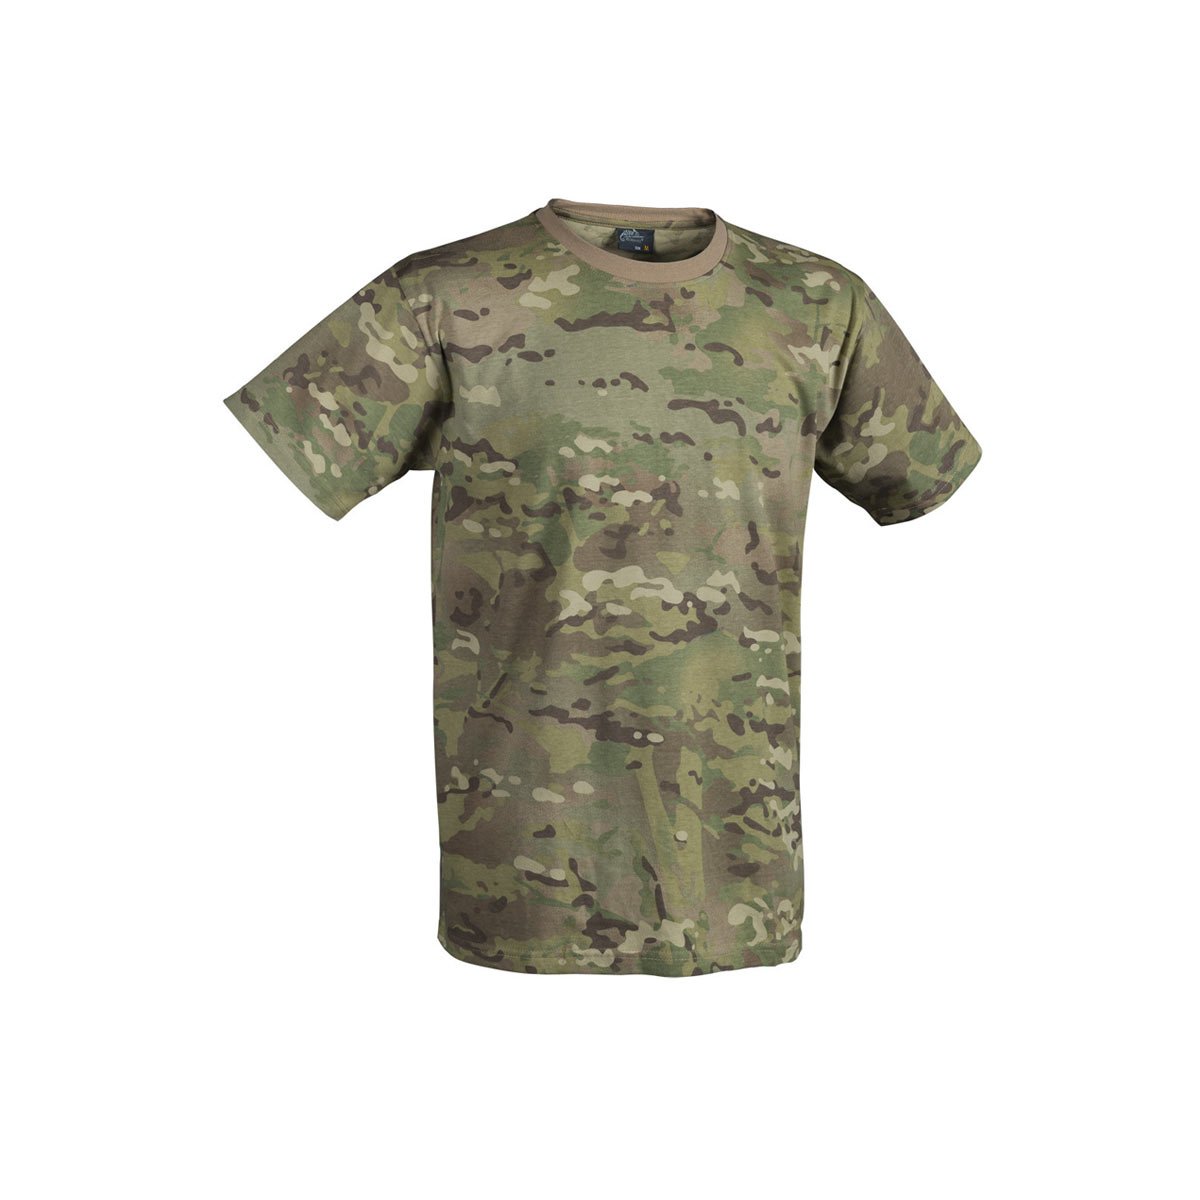 Classic Army T-shirt